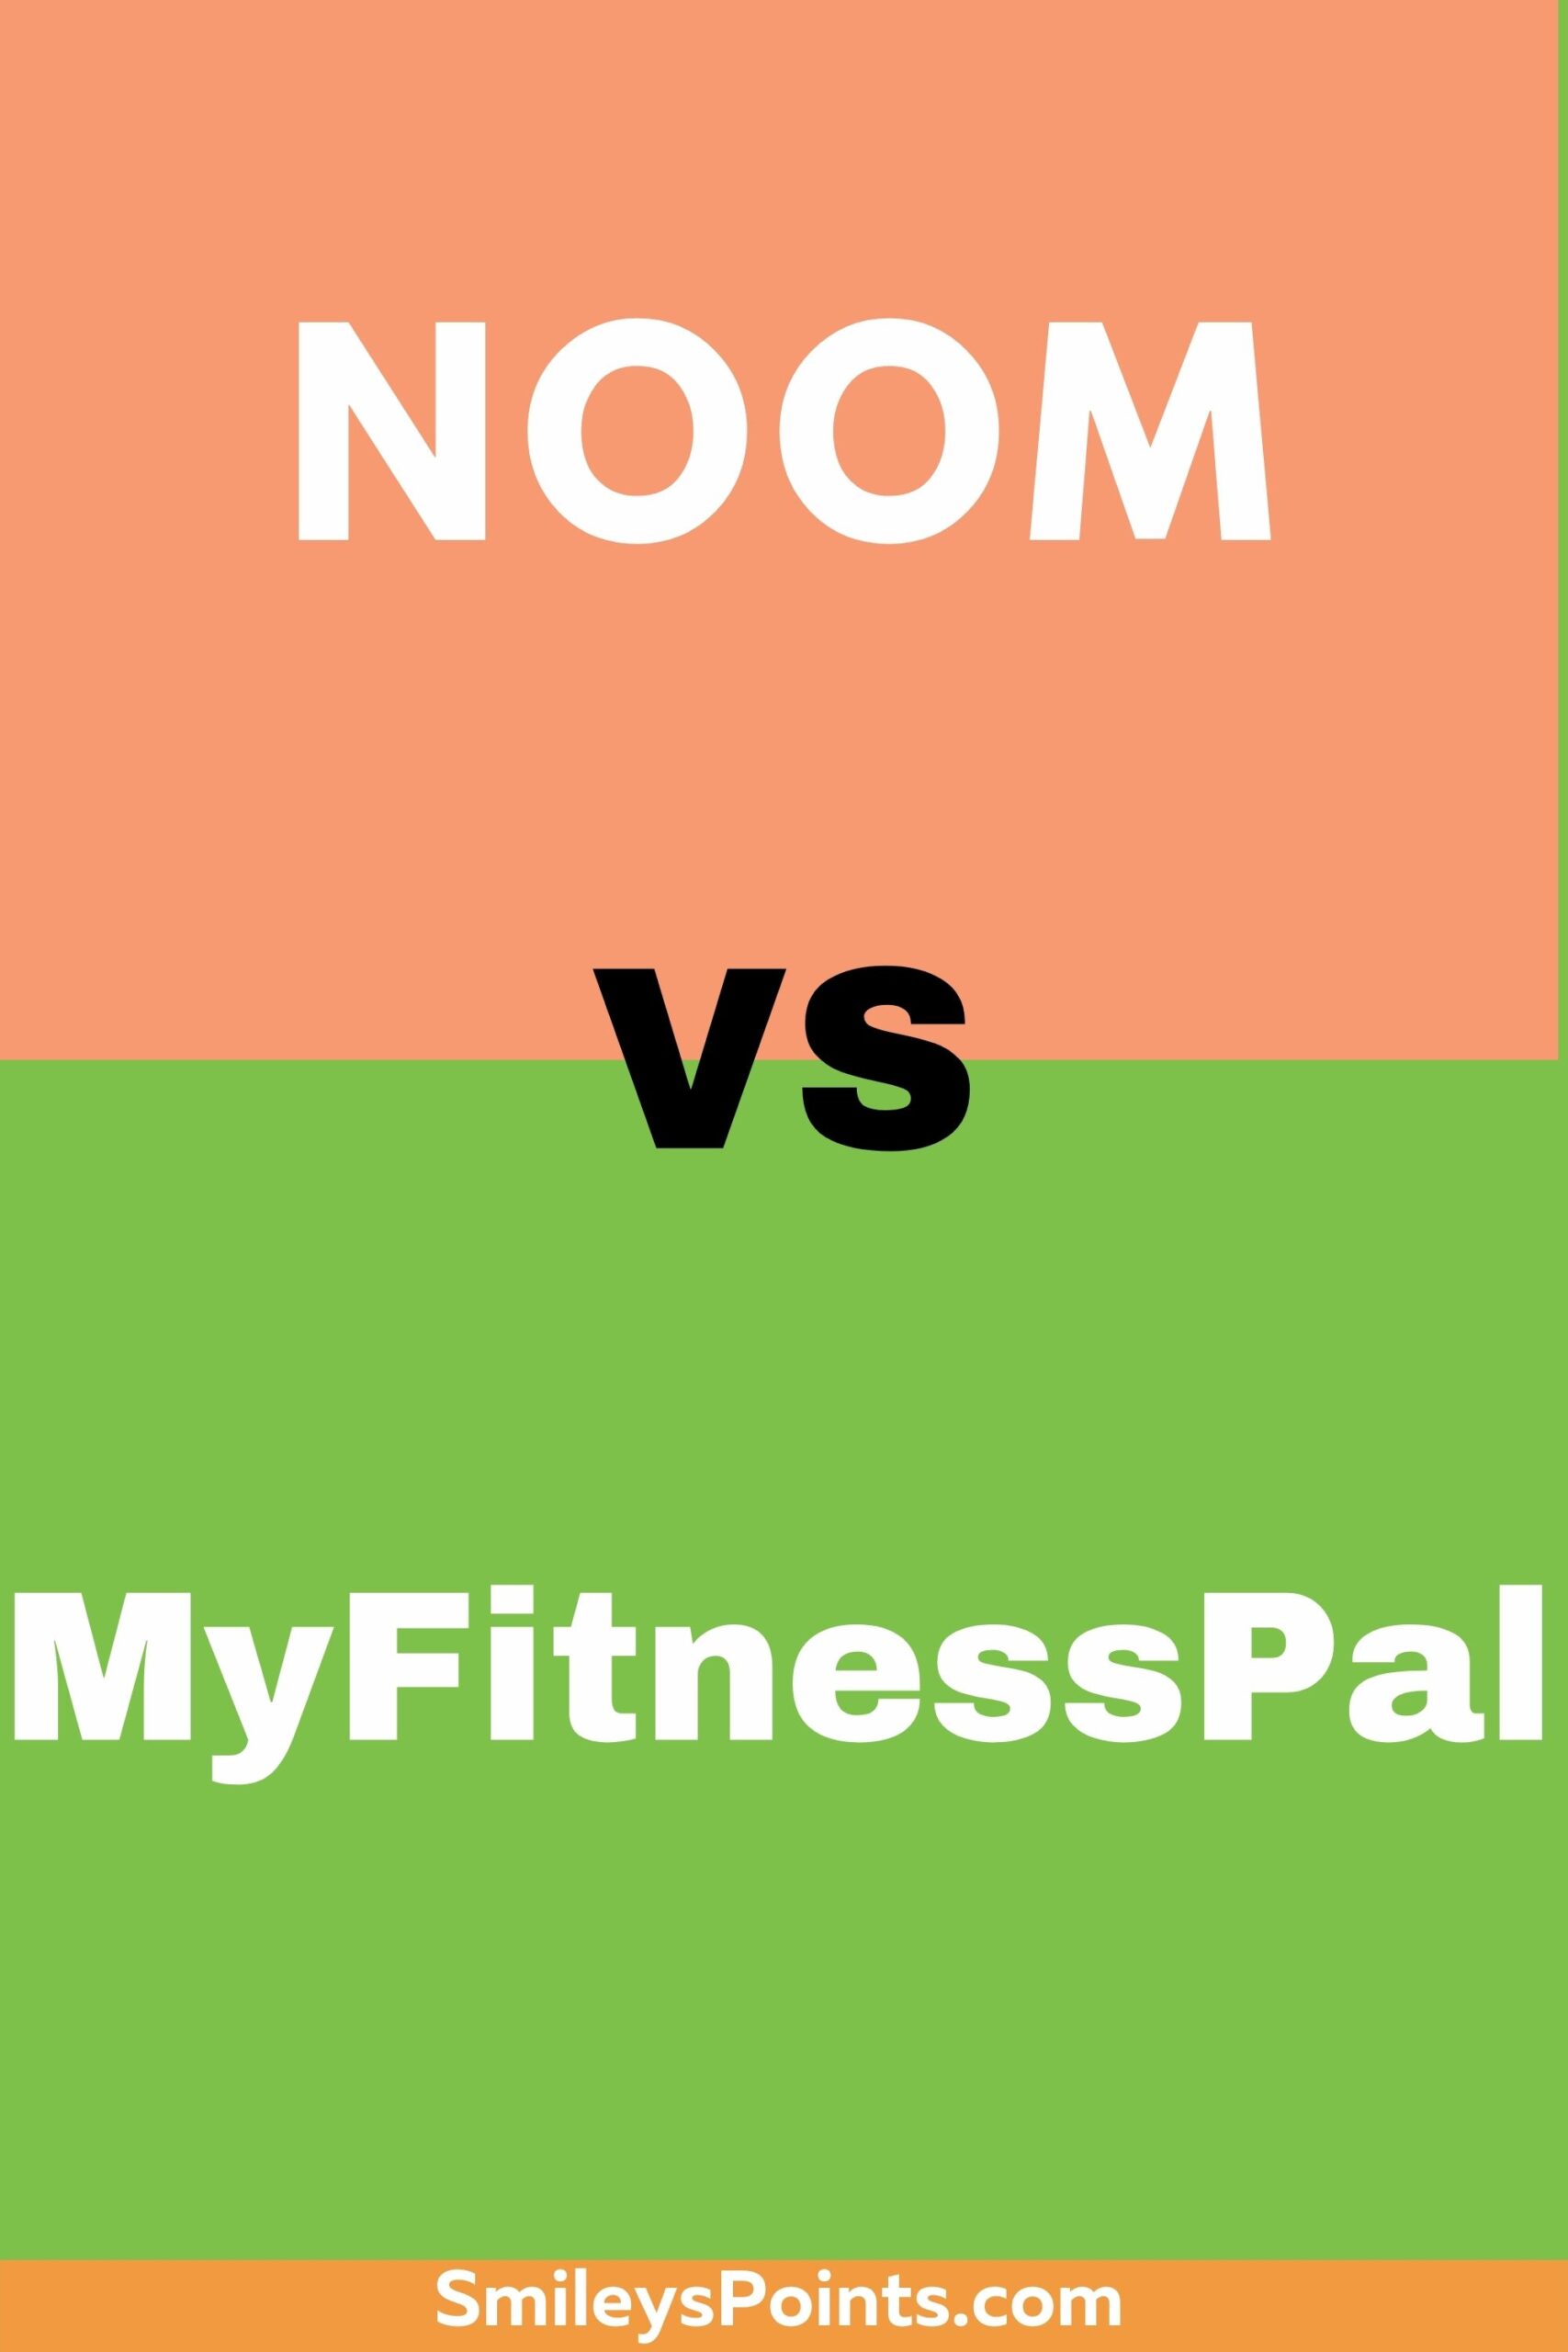 NOOM vs MyFitnessPal